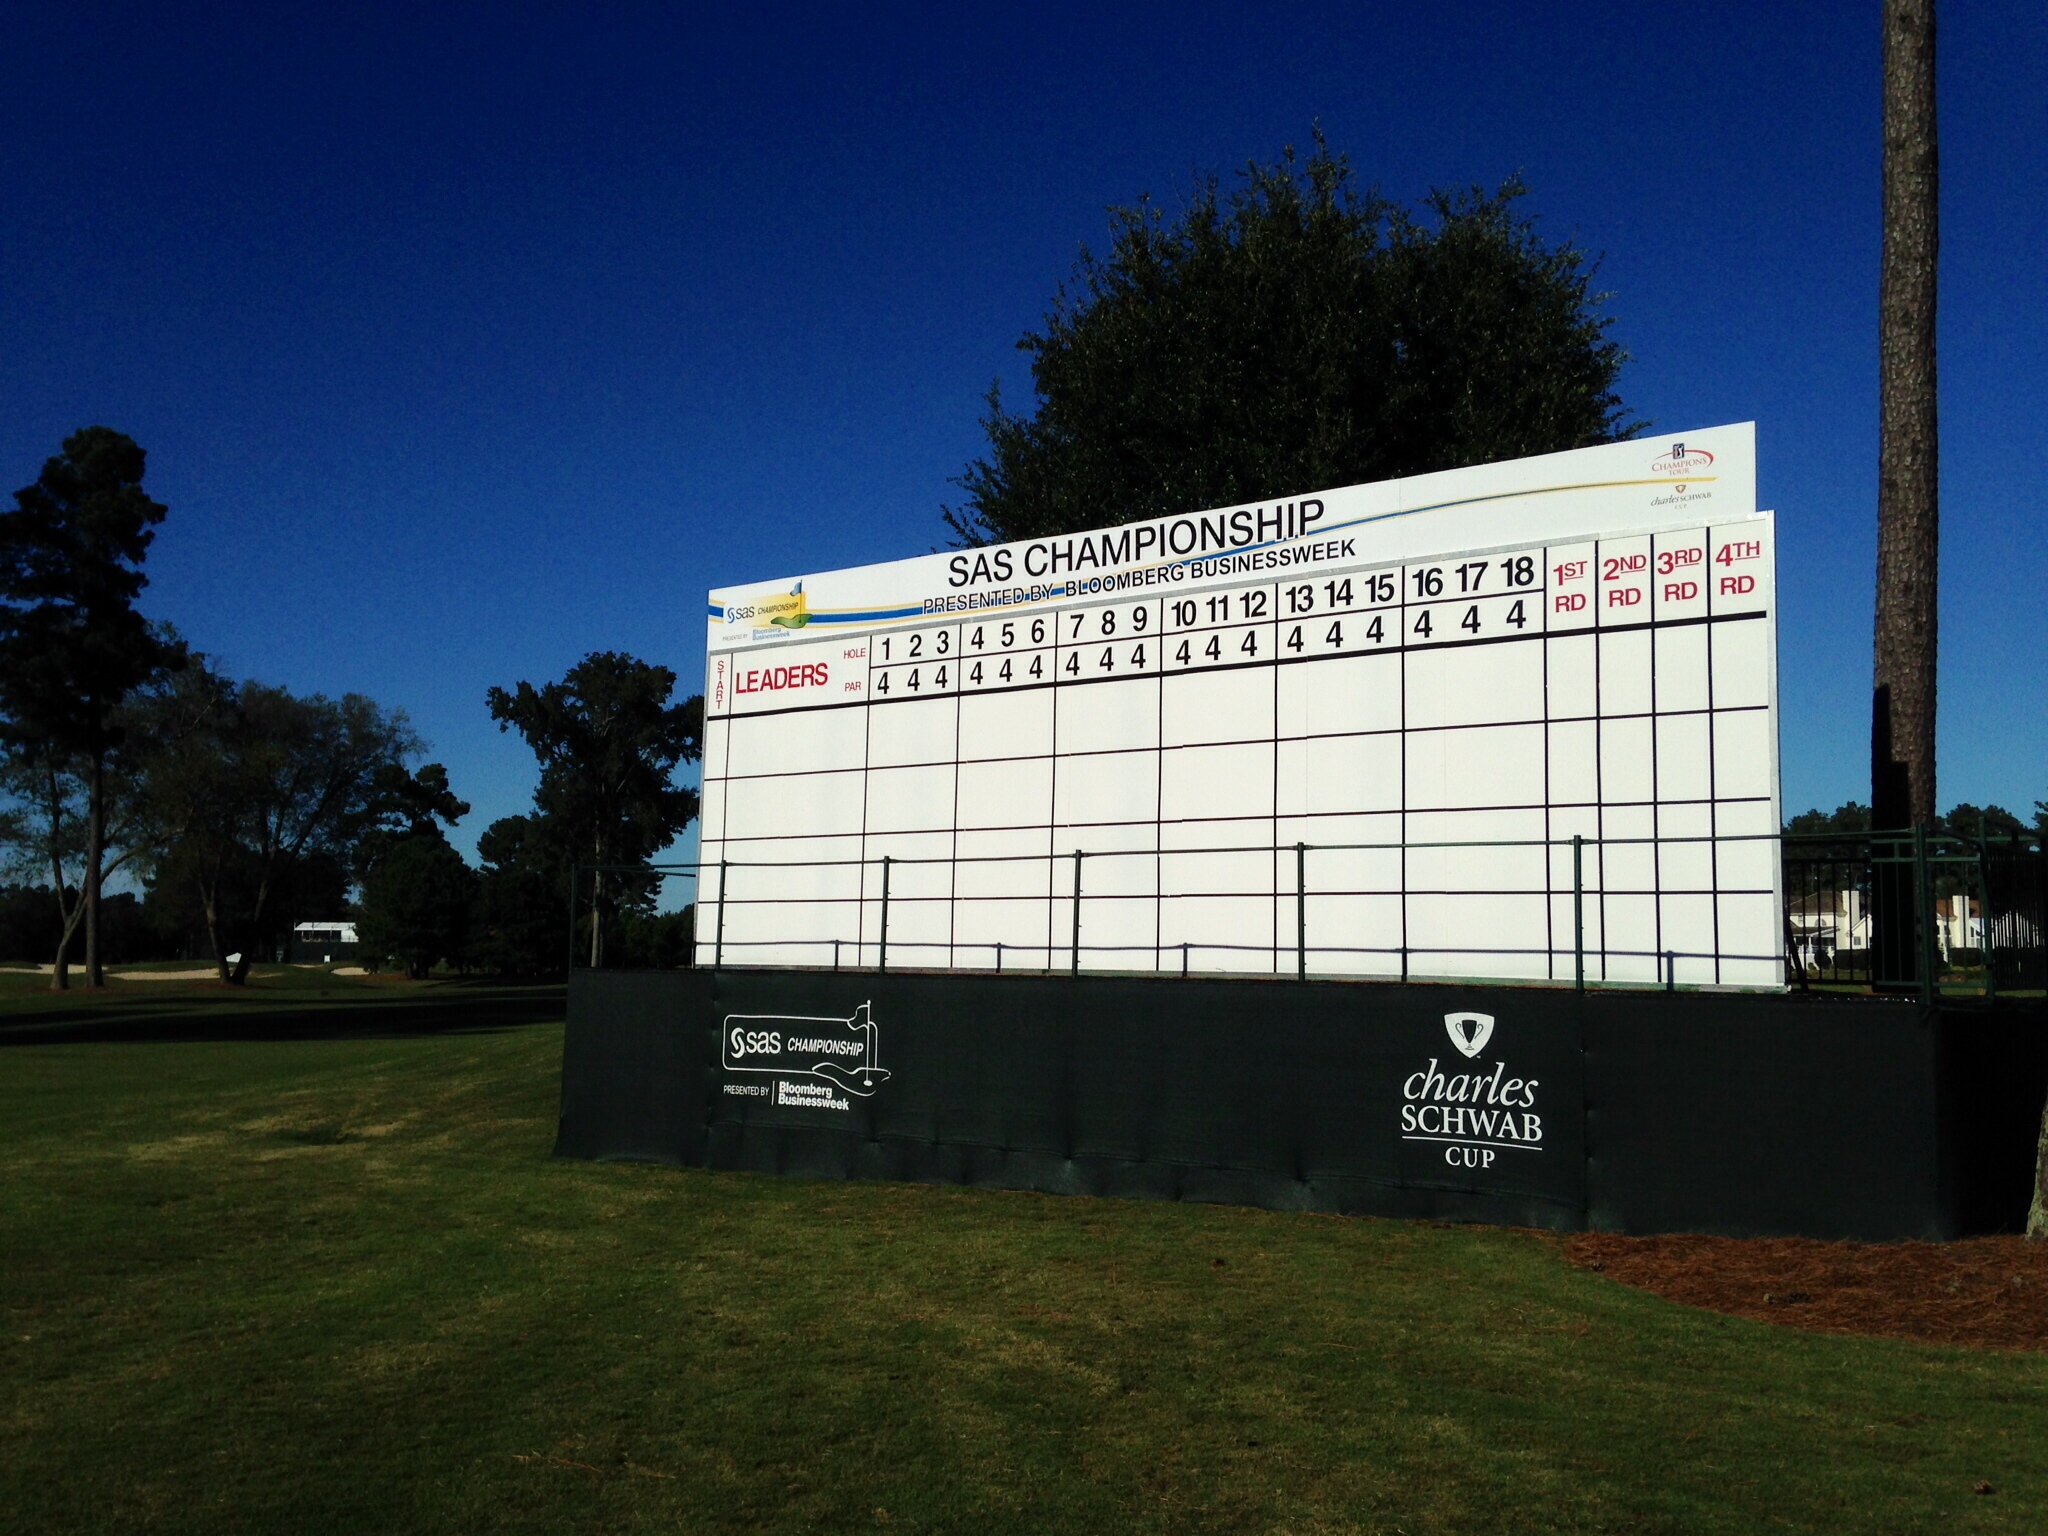 Manual Leaderboard installation at the SAS Championship PGA TOUR Champions tournament in Cary, North Carolina